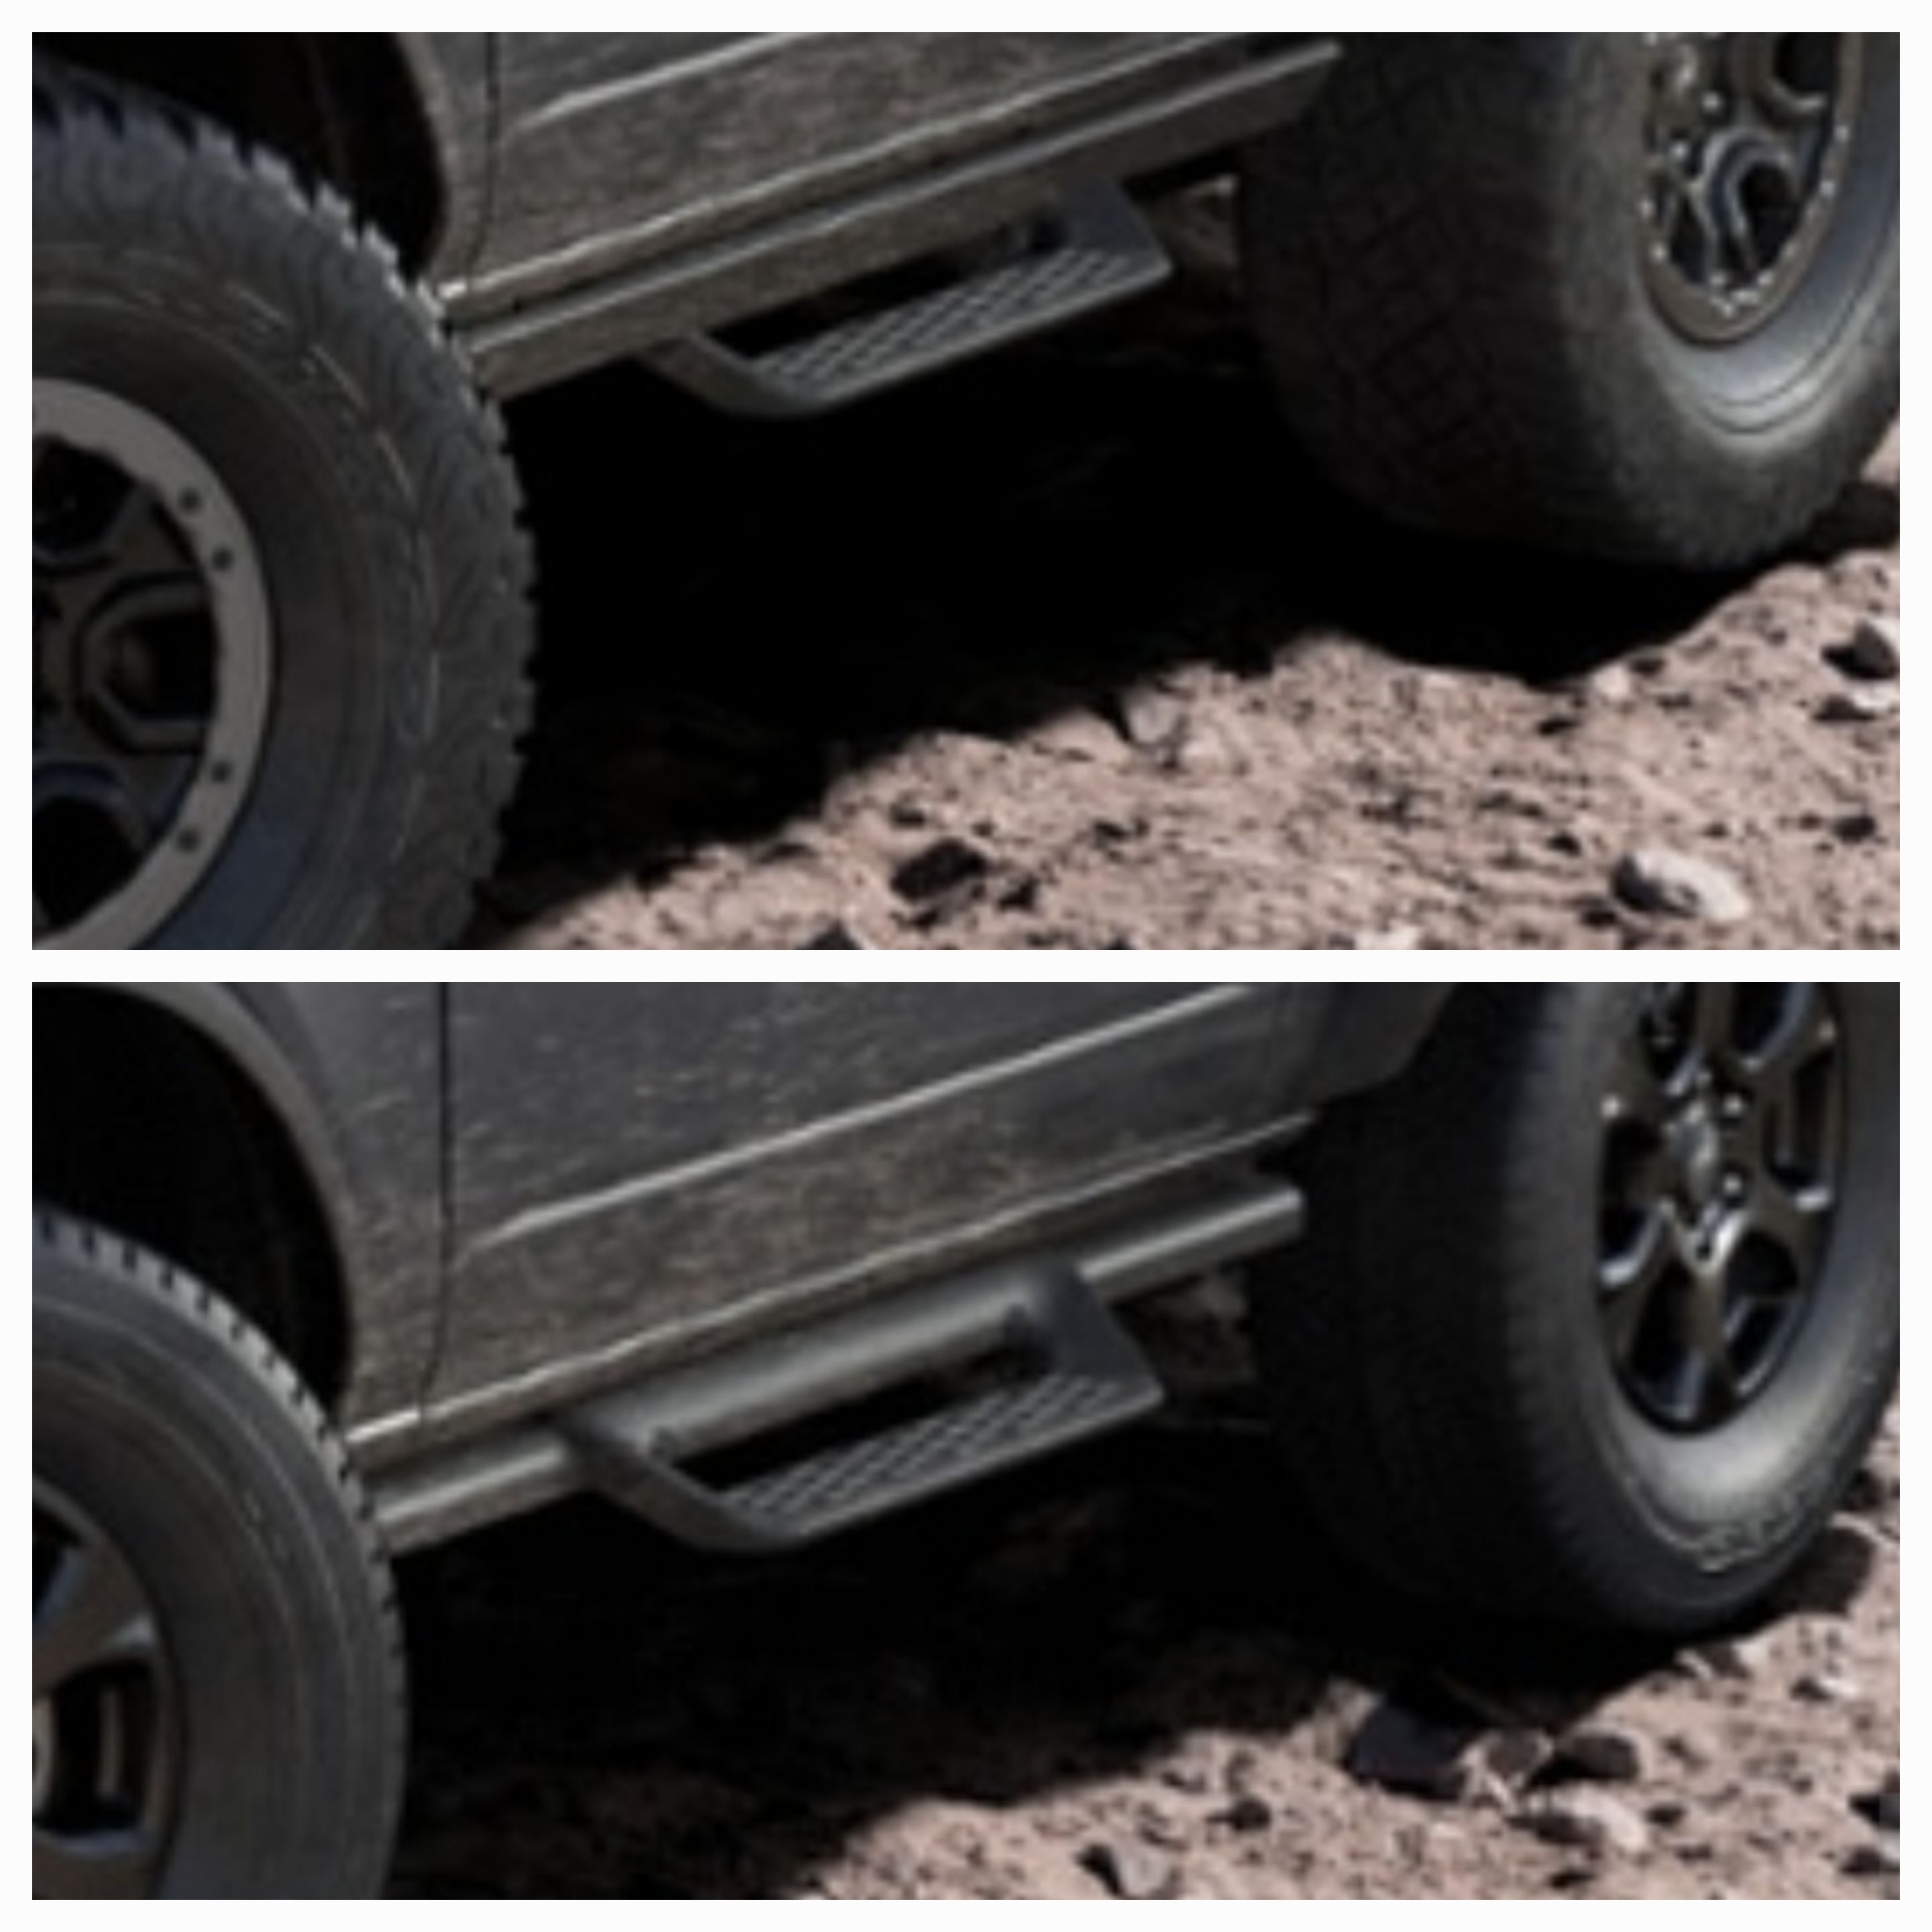 Ford Bronco Azure Gray Metallic 2023 Bronco (w/ new rock rails design) -- first look sighting 20220920_155439